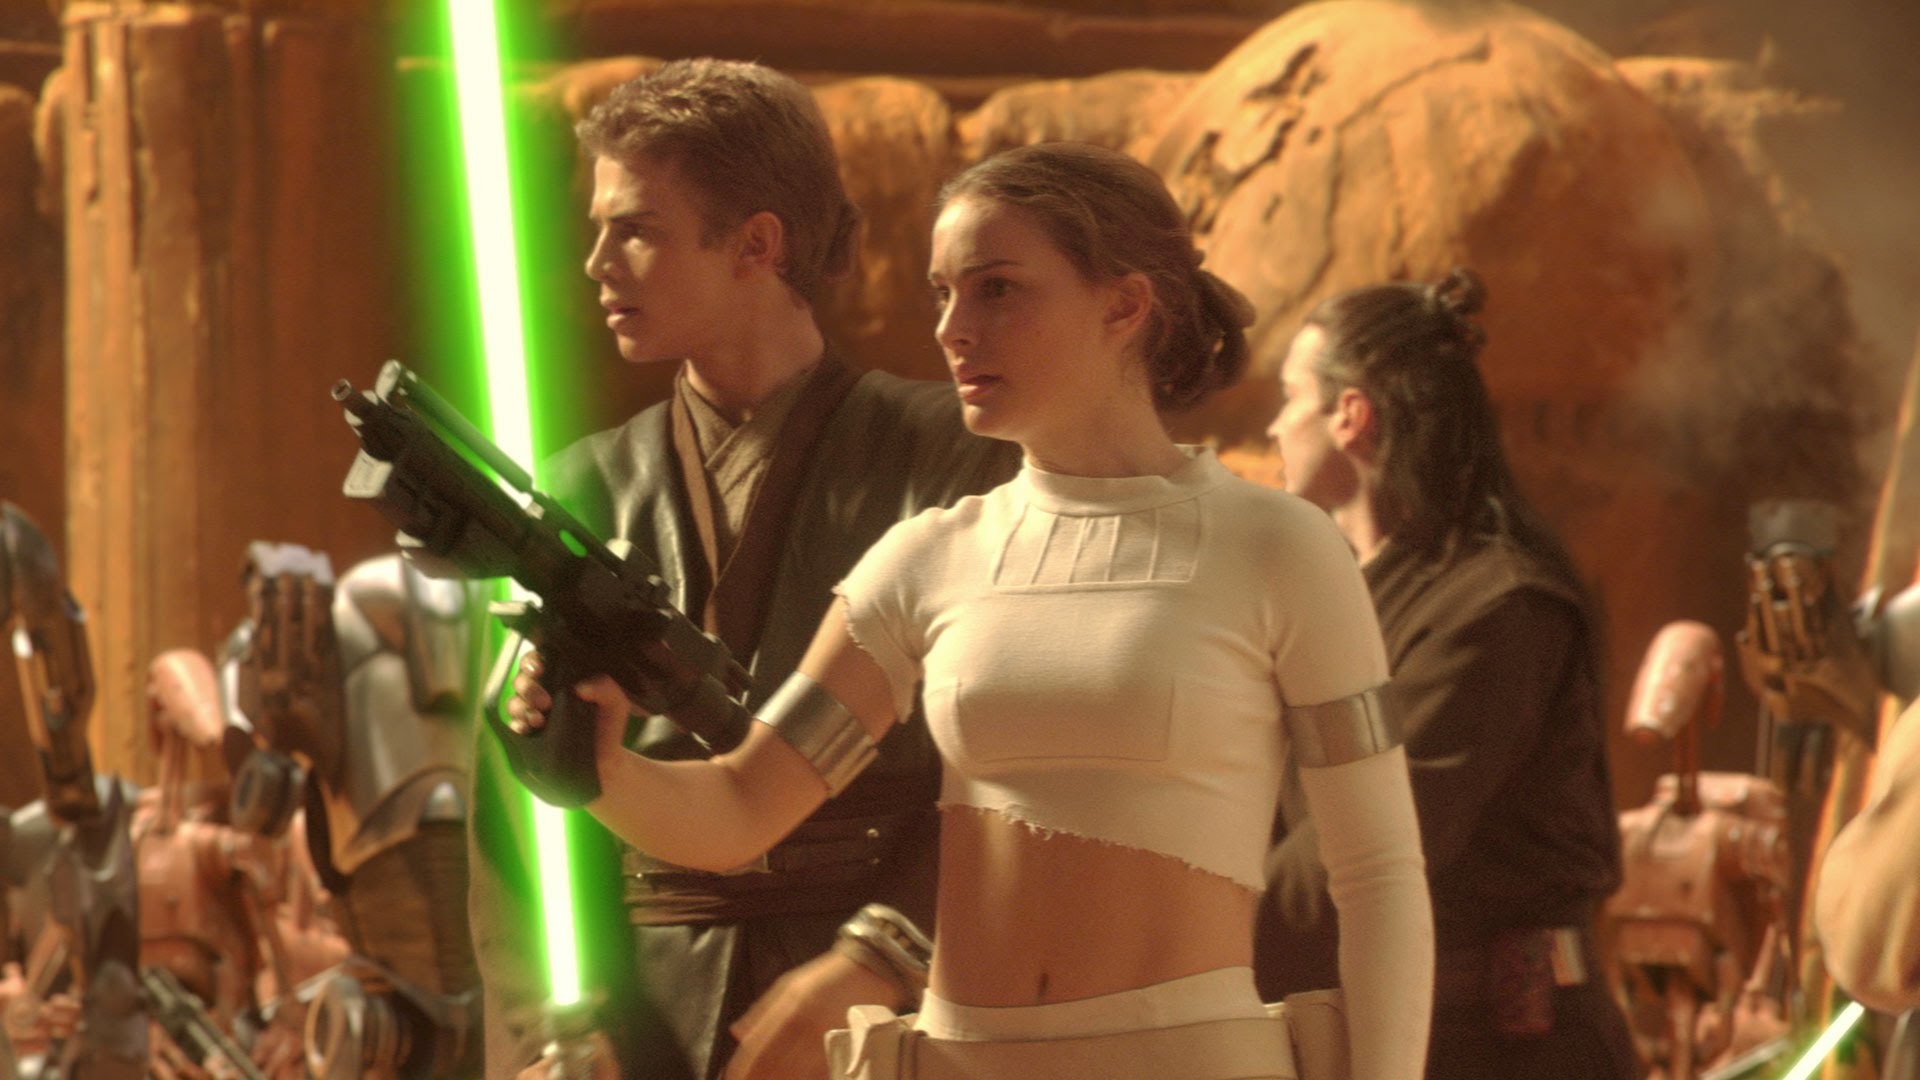 1920x1080 STAR WARS Love Story : PadmÃ© Amidala and Anakin Skywalker - Princess Leia  and Han Solo